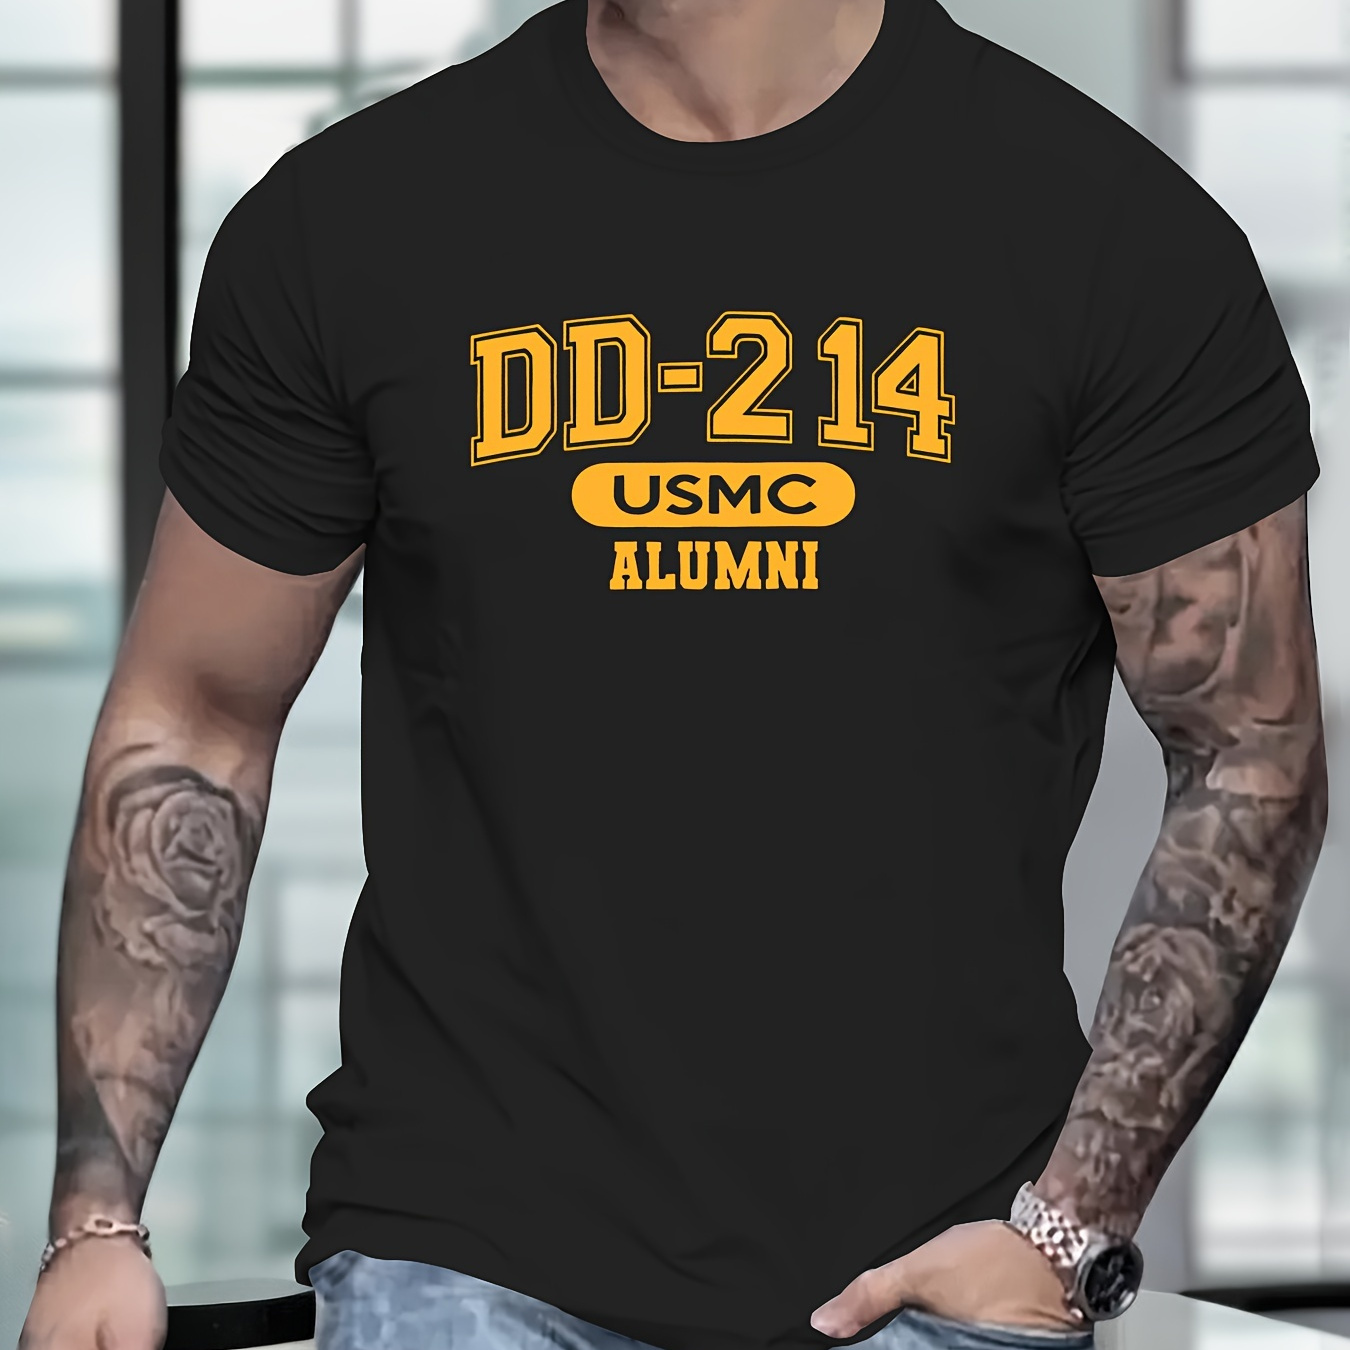 

Dd-214 Alumni Print Tee Shirt, Tees For Men, Casual Short Sleeve T-shirt For Summer